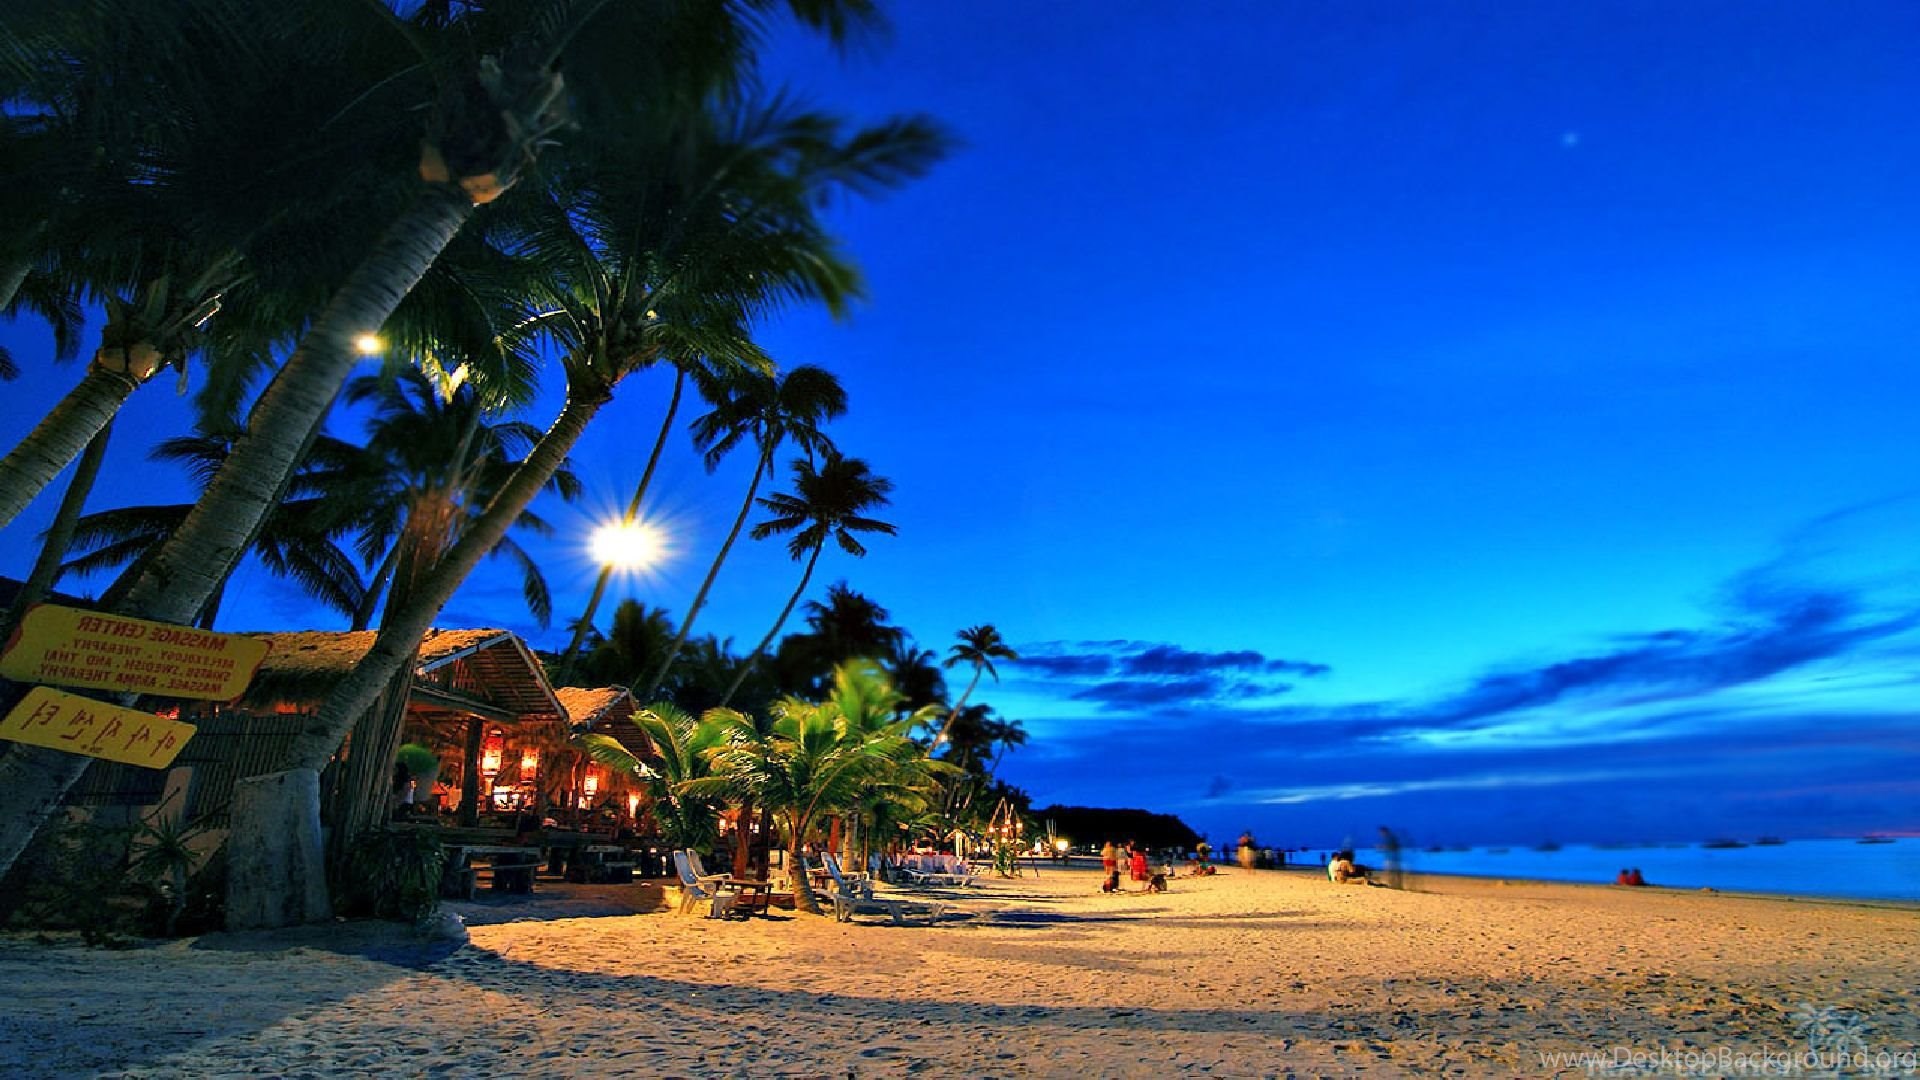 night beach wallpaper,sky,beach,tropics,tree,palm tree